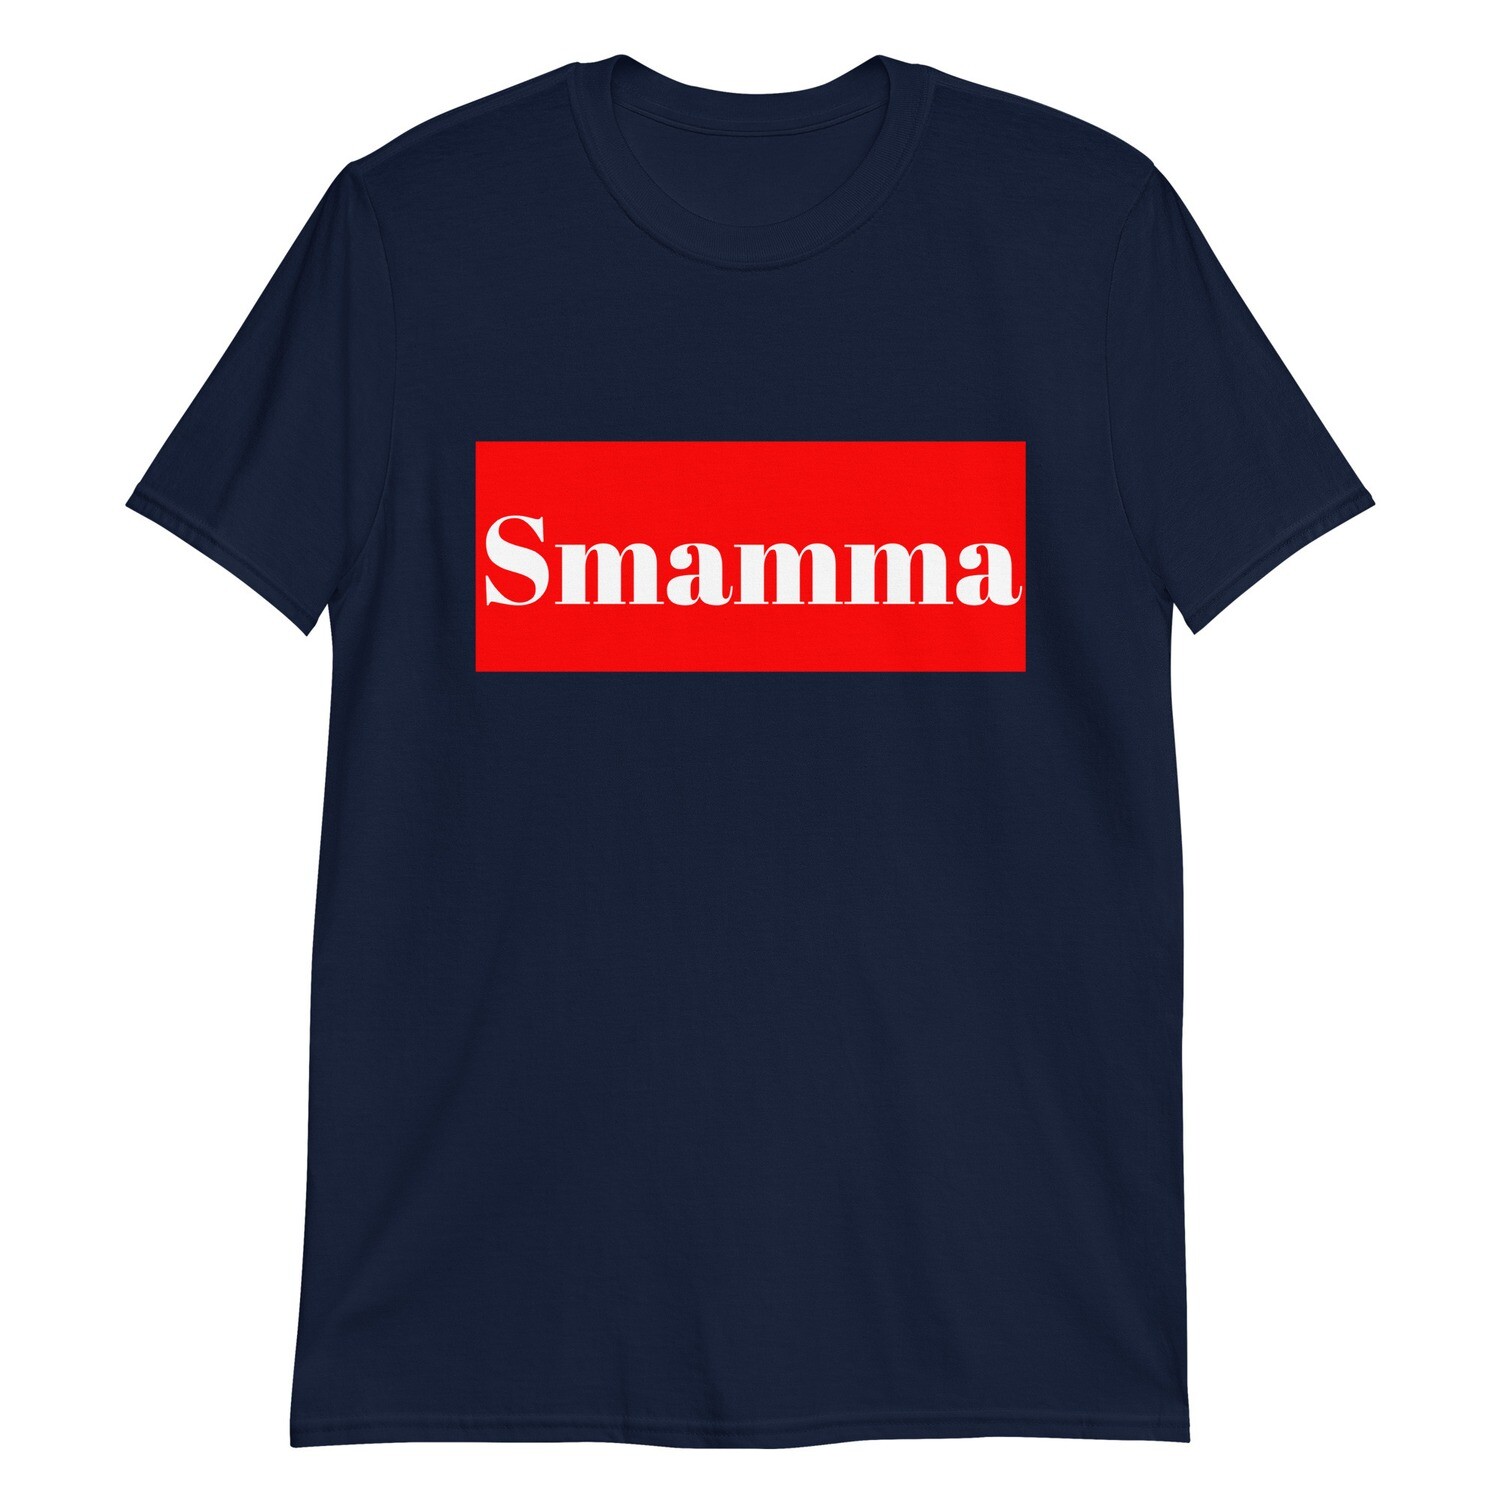 Smamma (Shirt / unisex)